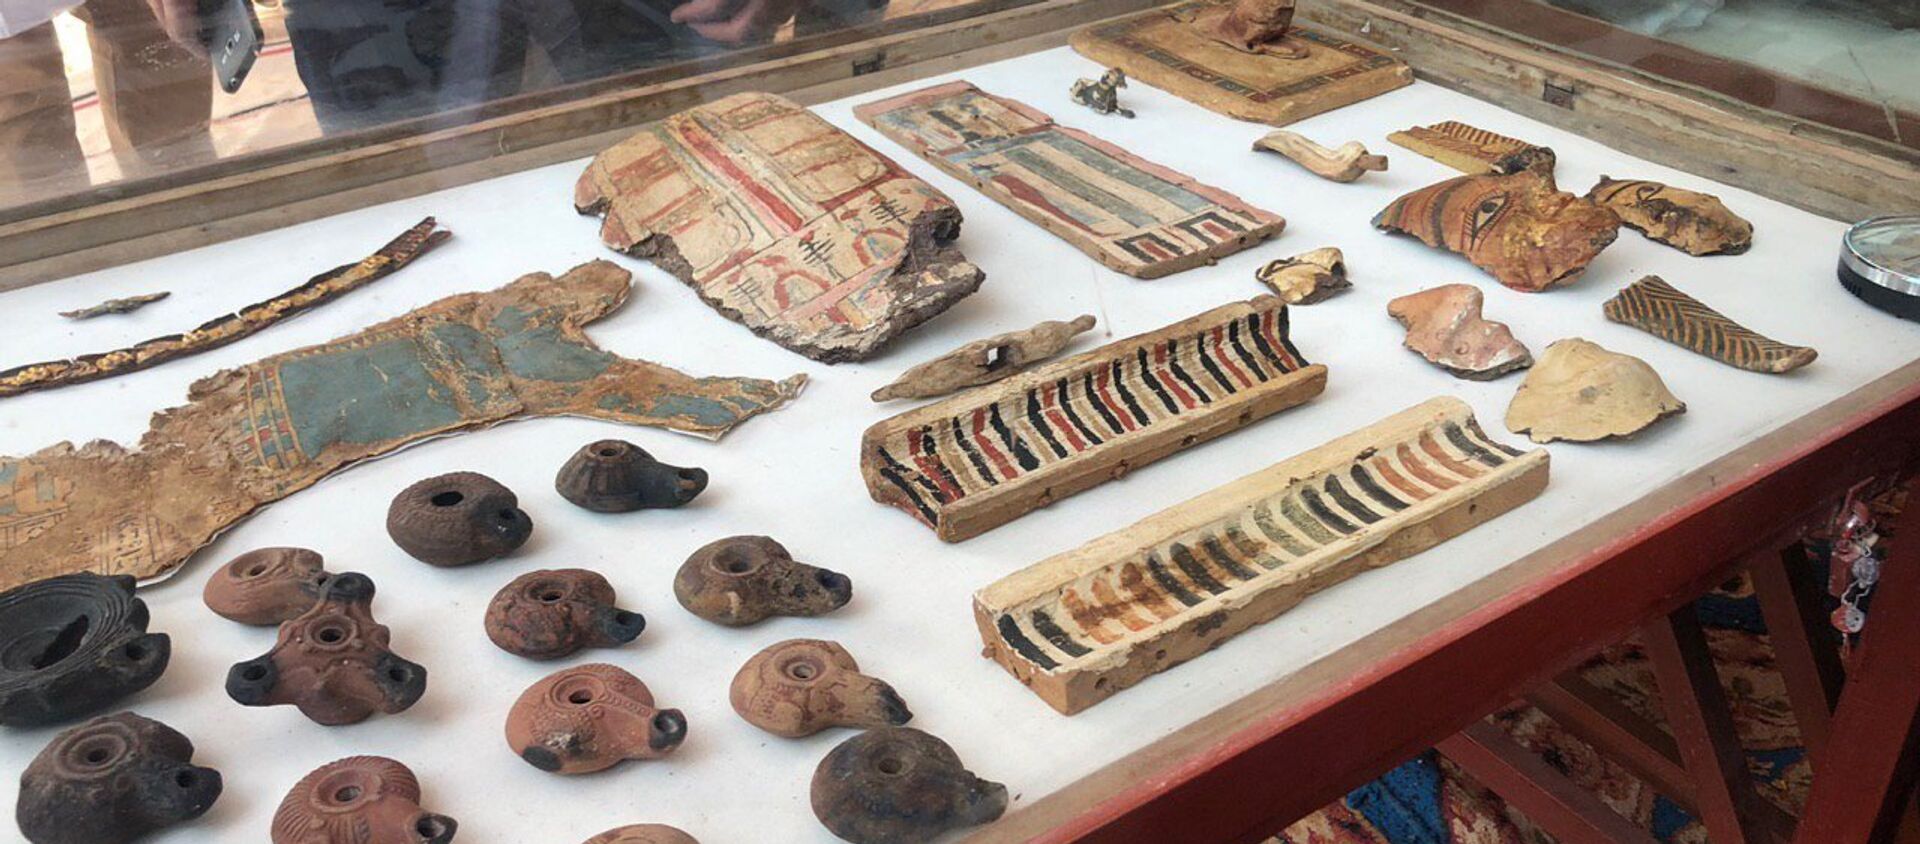 Los hallazgos arqueológicos en una antigua tumba en Egipto (archivo) - Sputnik Mundo, 1920, 19.06.2019